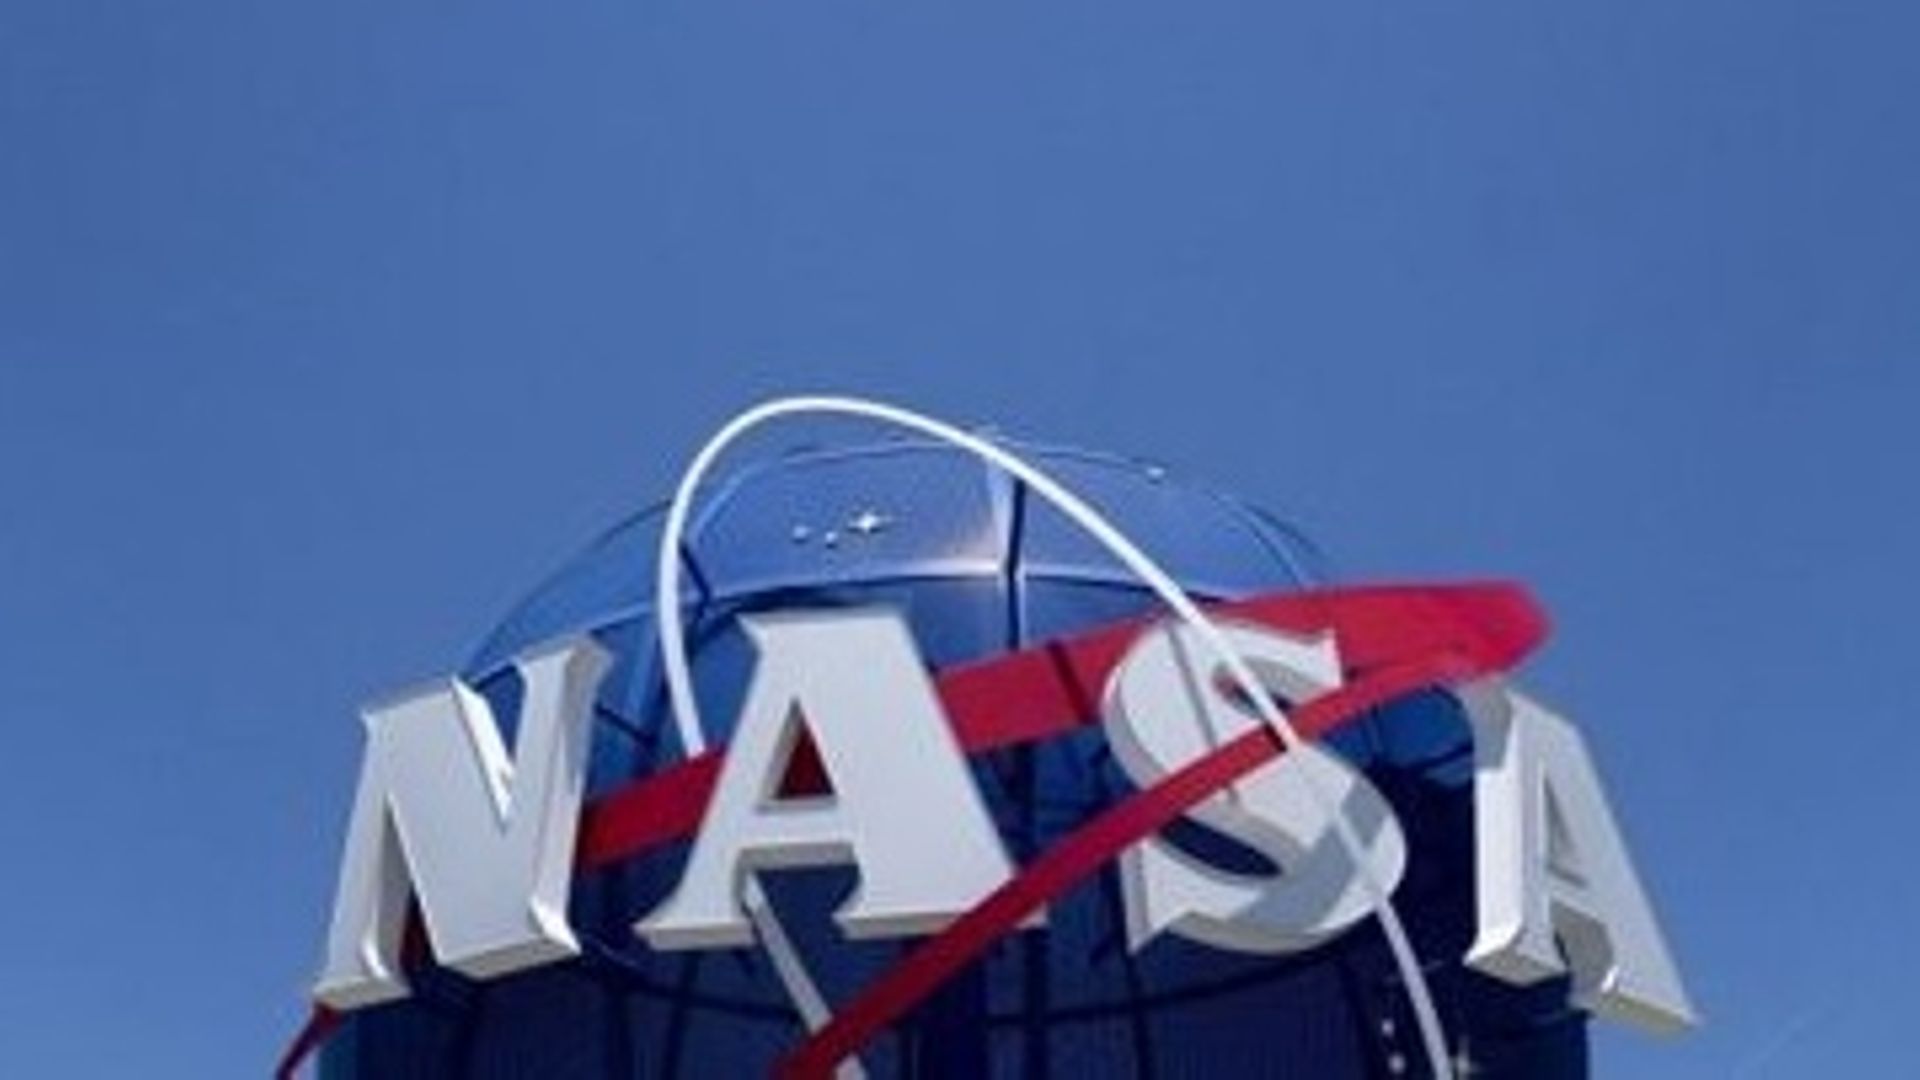 A sign displays the NASA logo outside of NASA Langley Research Center in Hampton, Virginia, on June 15, 2022. Stefani Reynolds / AFP